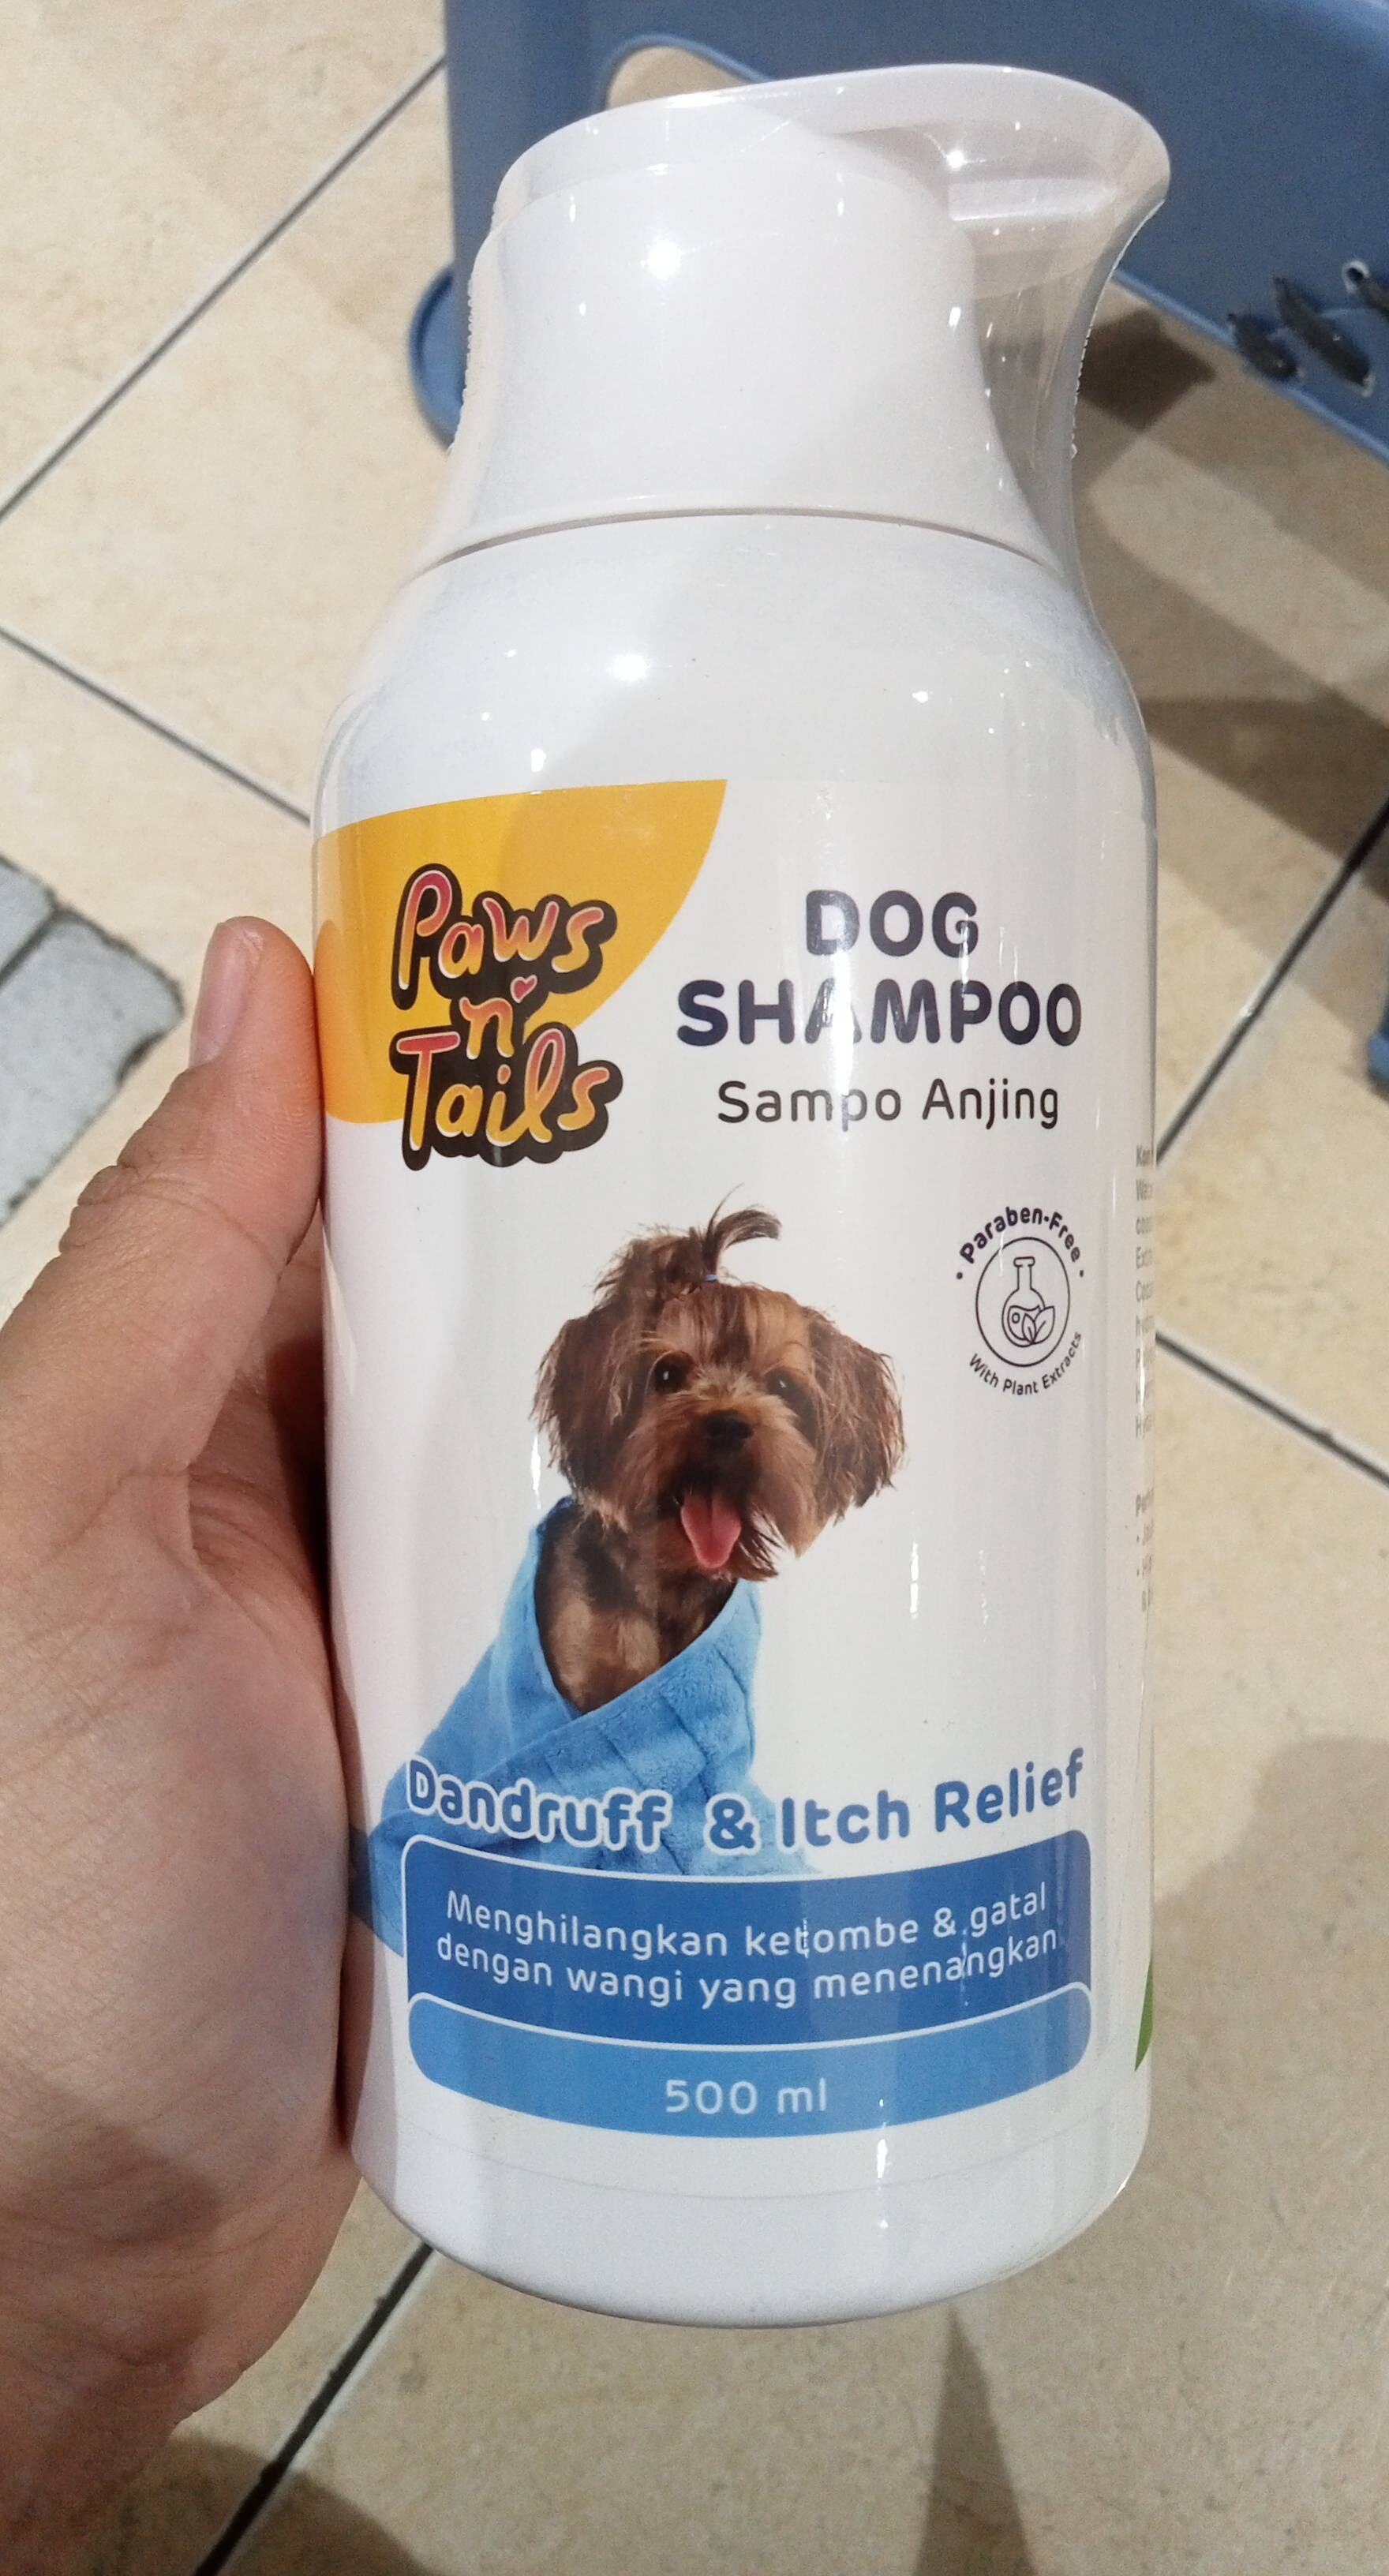 Dog shampoo anti dandruff n itch relief - Продукт - en